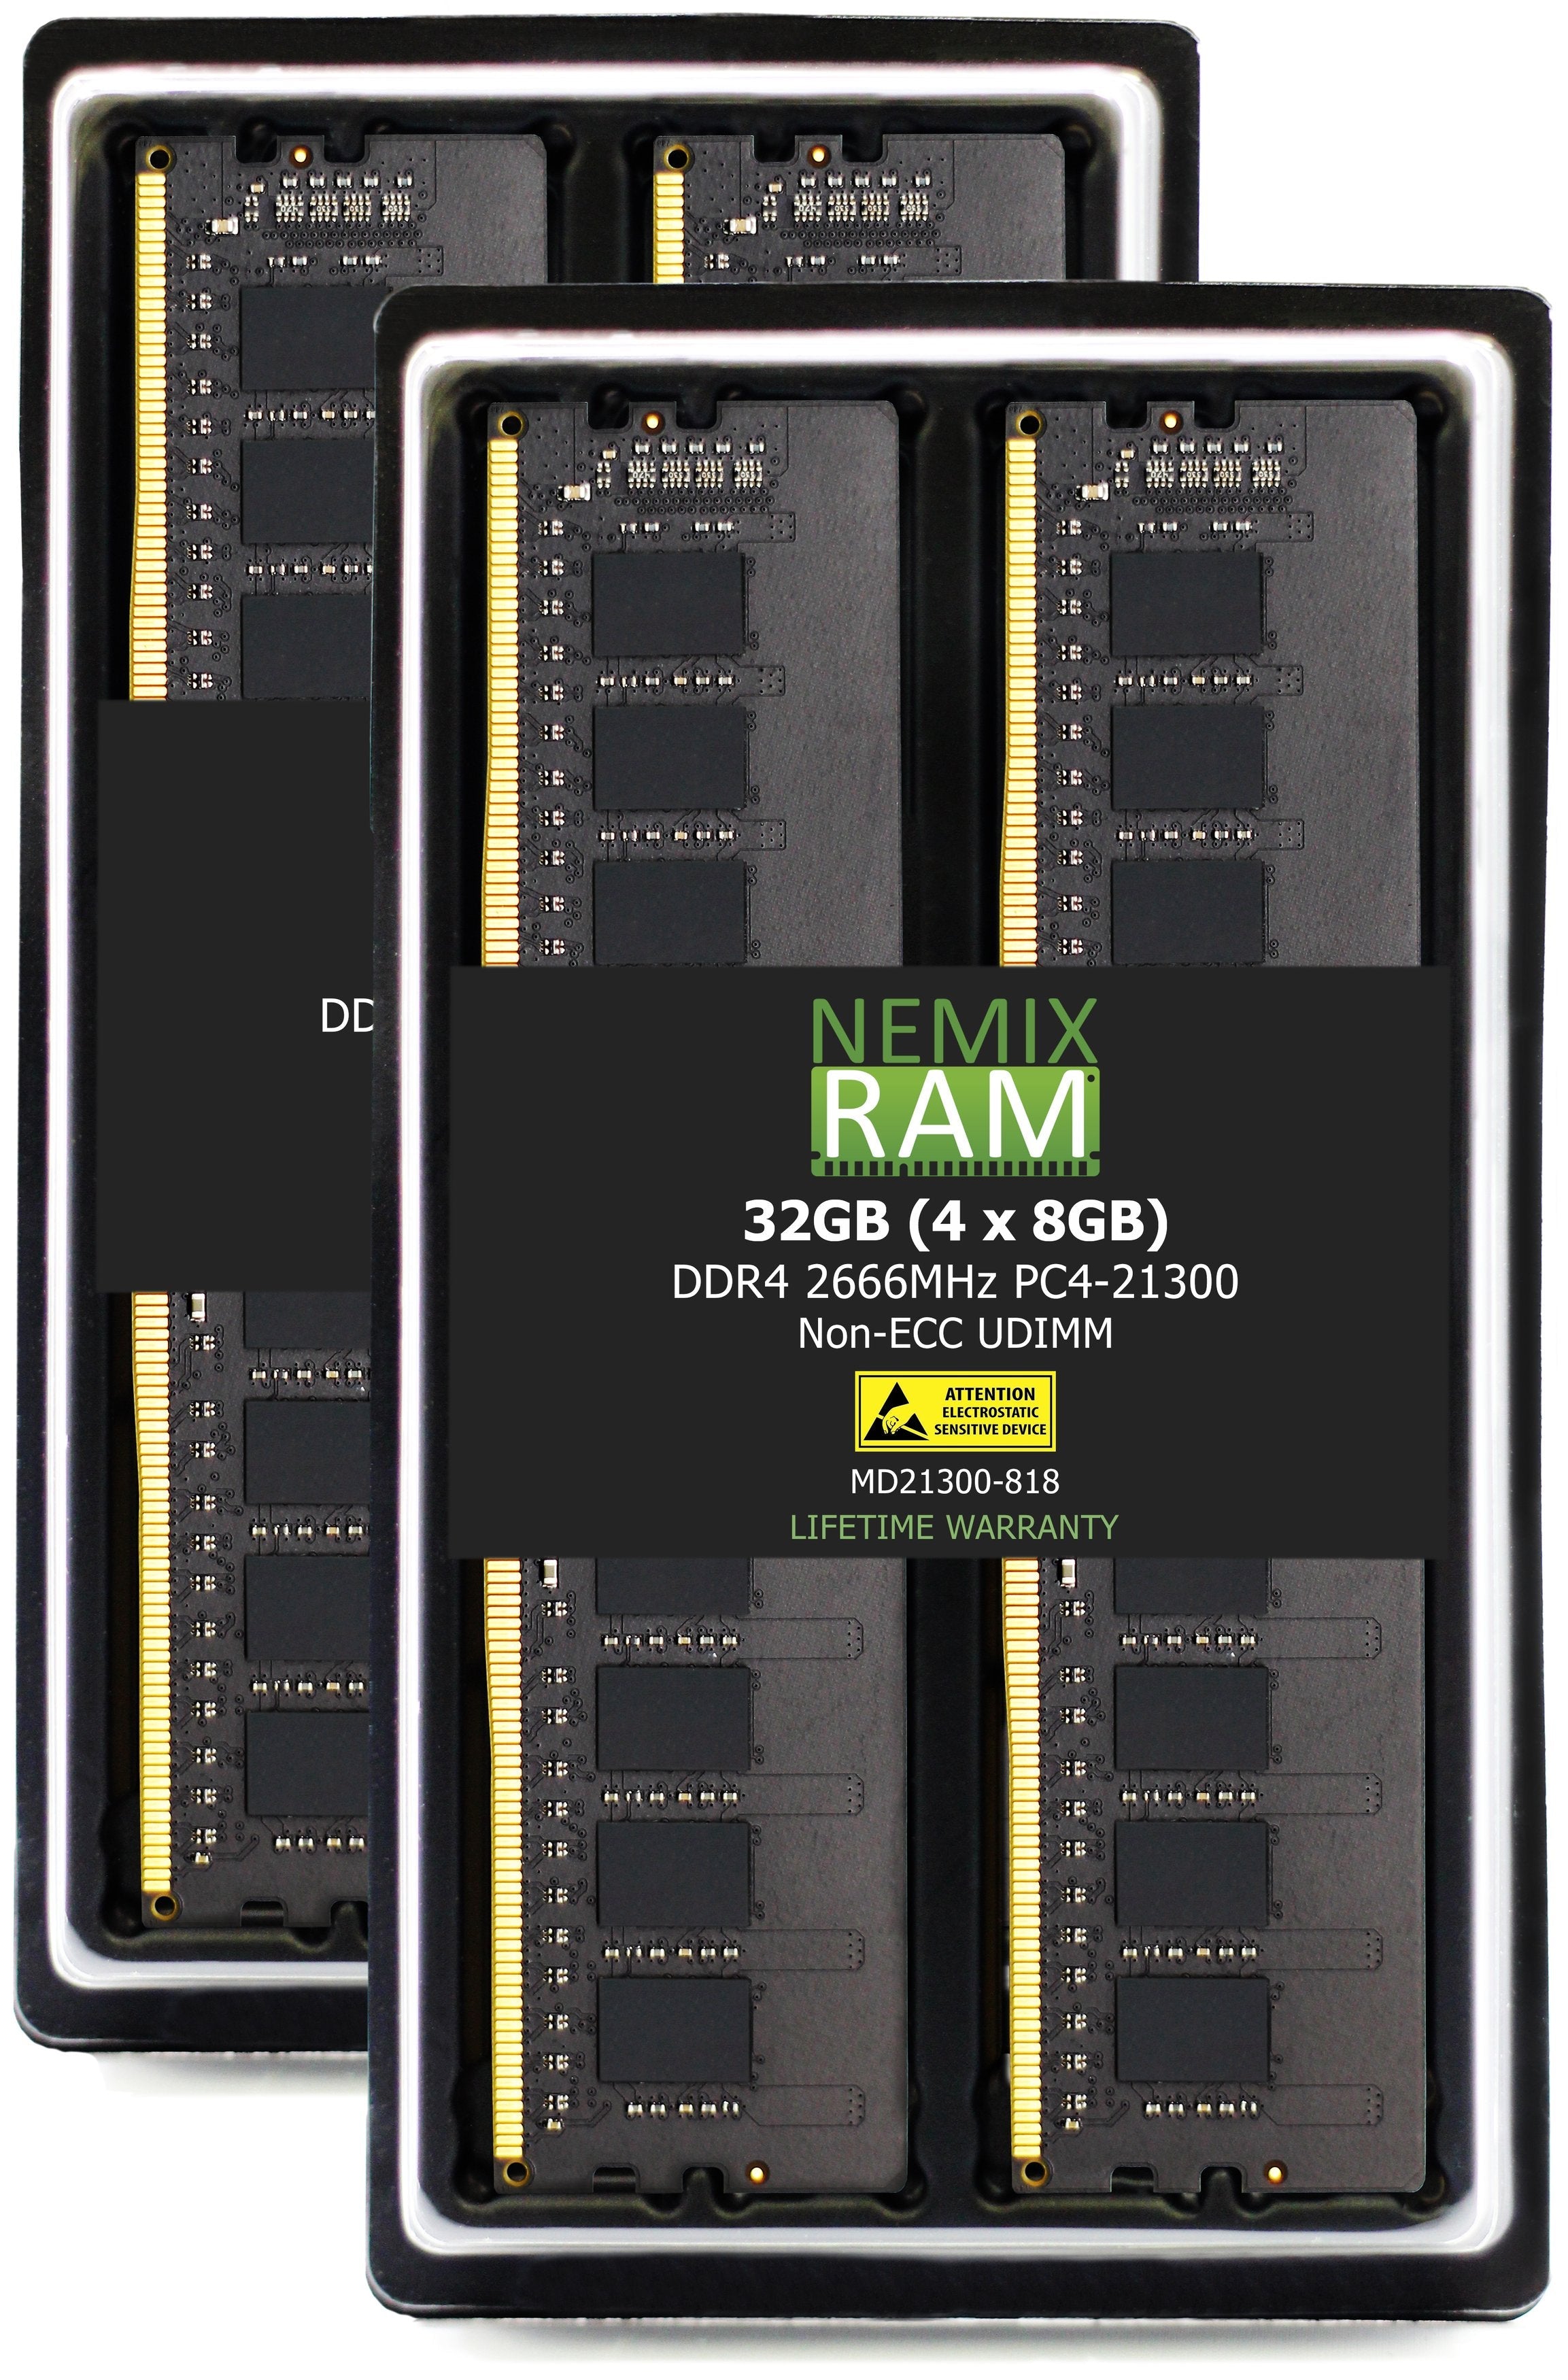 DDR4 2666MHZ PC4-21300 UDIMM 1RX8